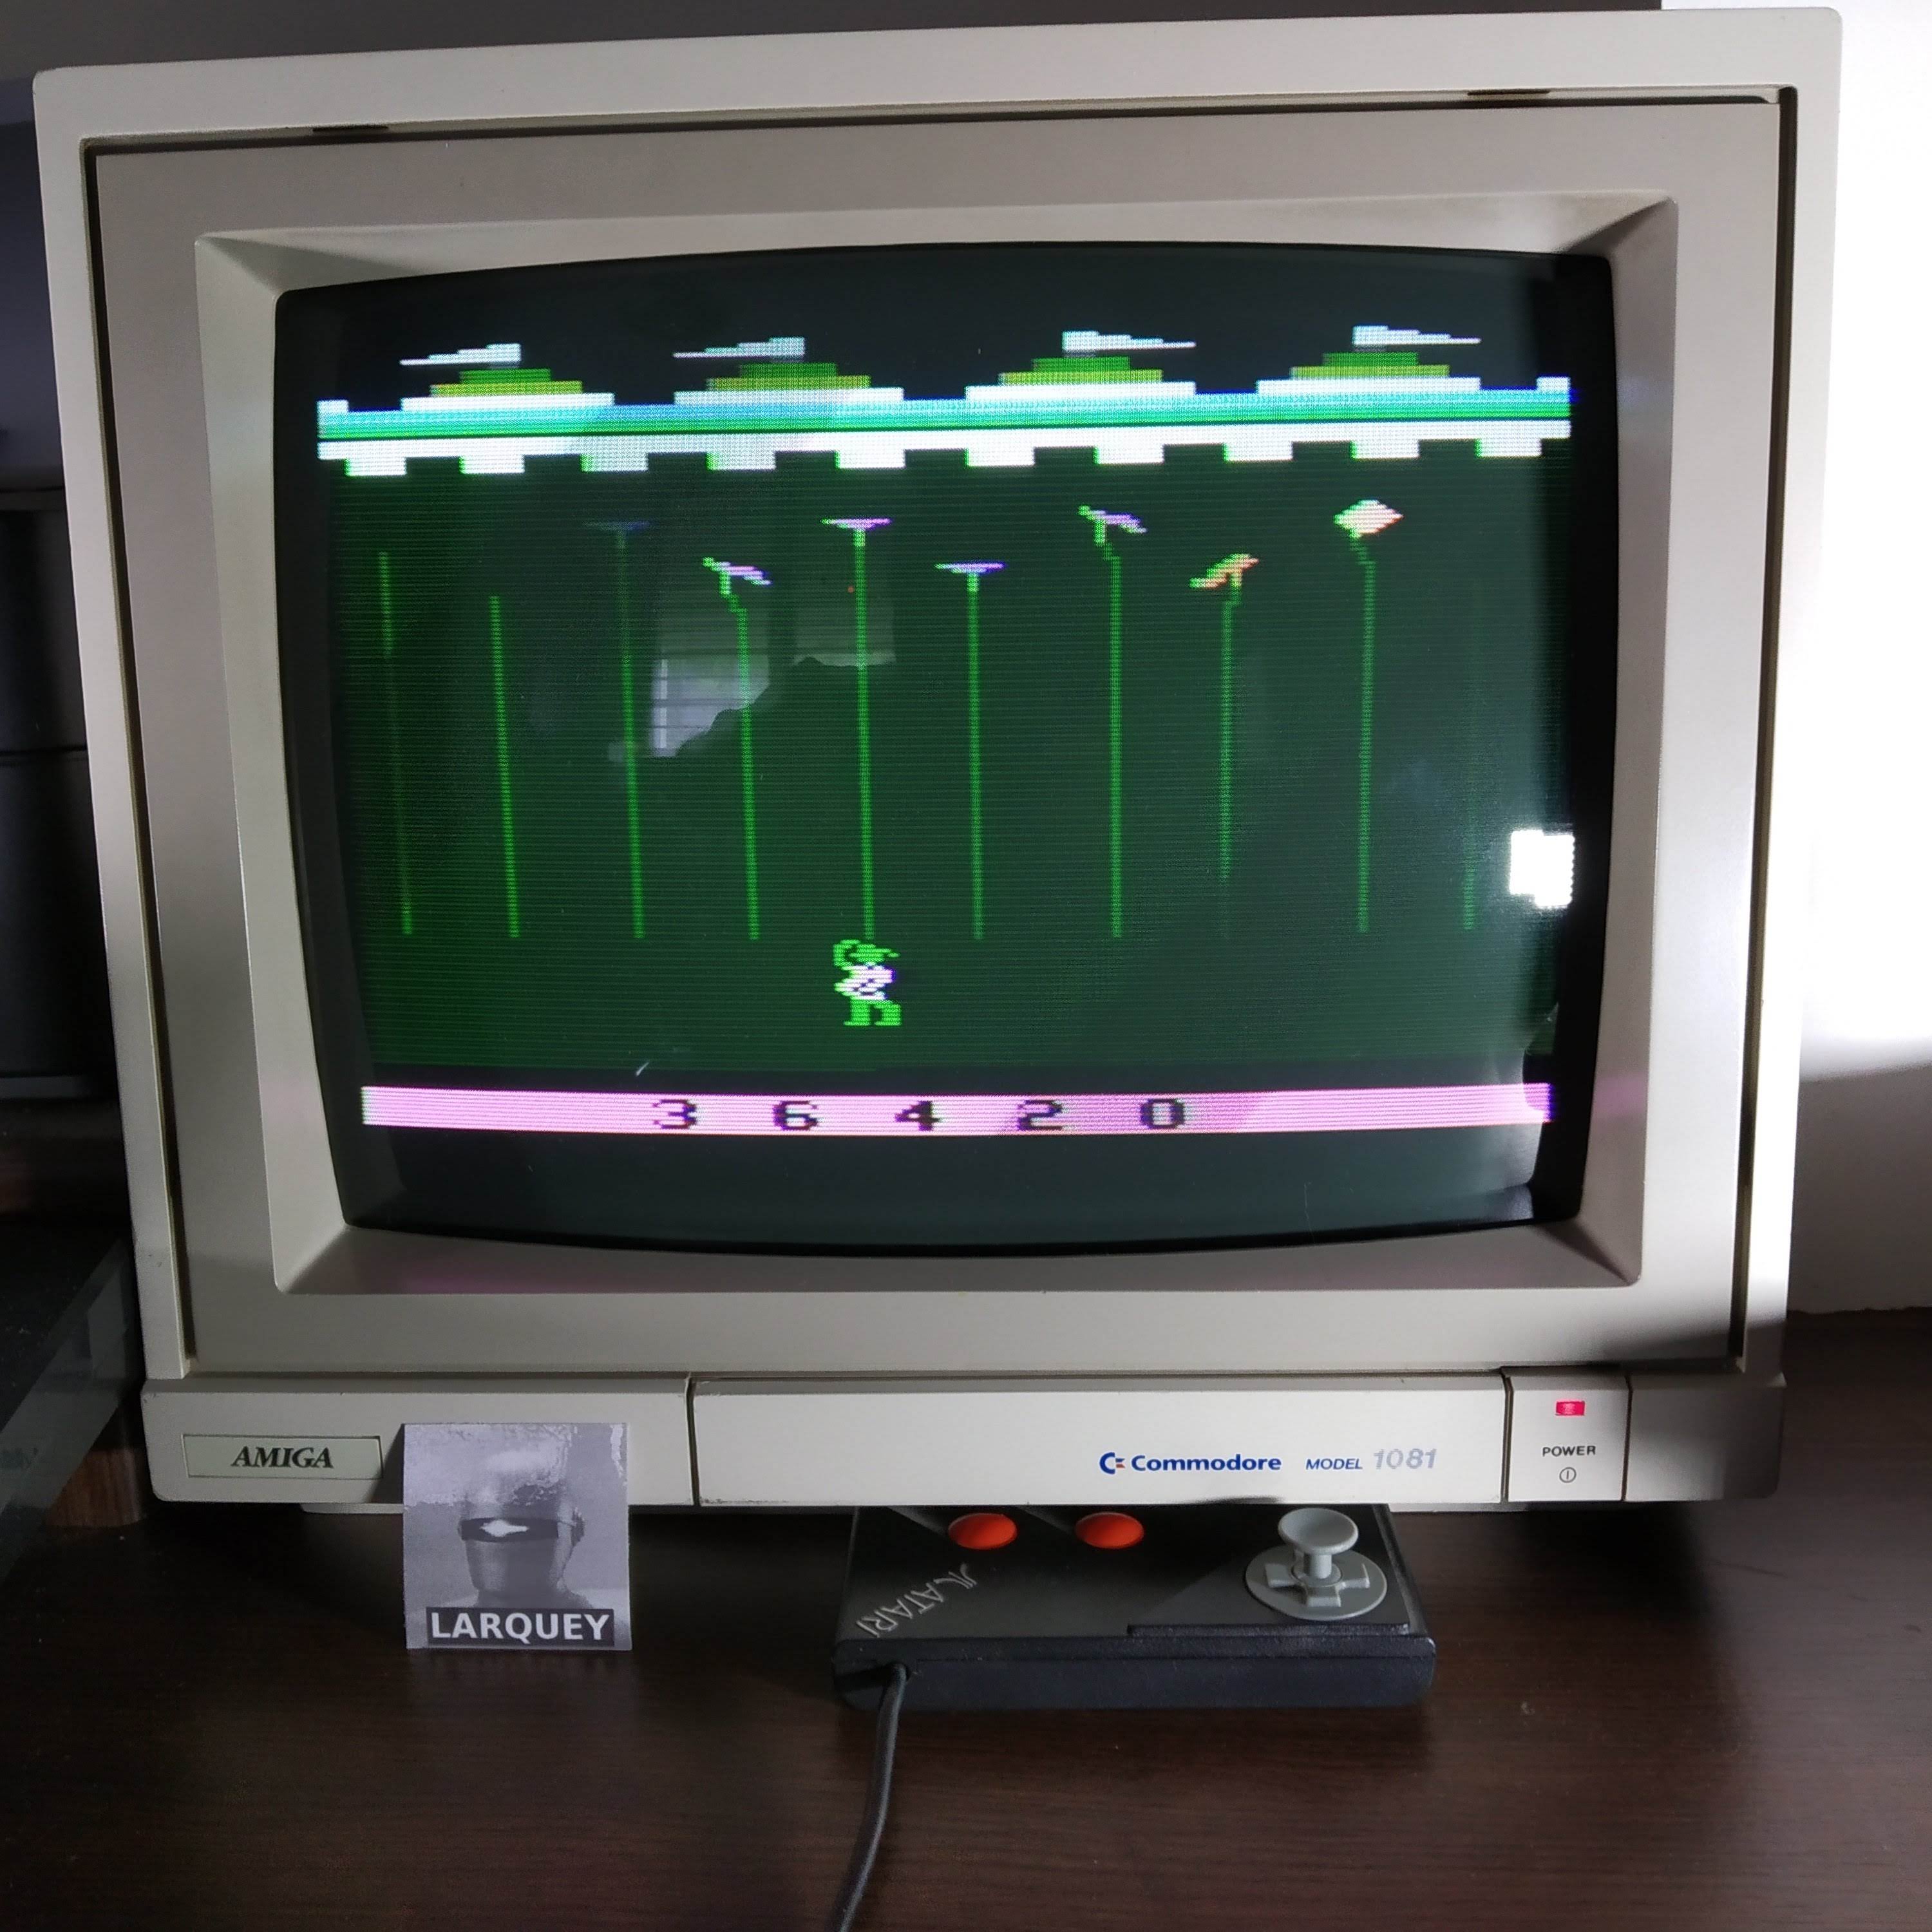 Larquey: Dishaster: Game 2 (Atari 2600) 36,420 points on 2020-06-14 08:12:20